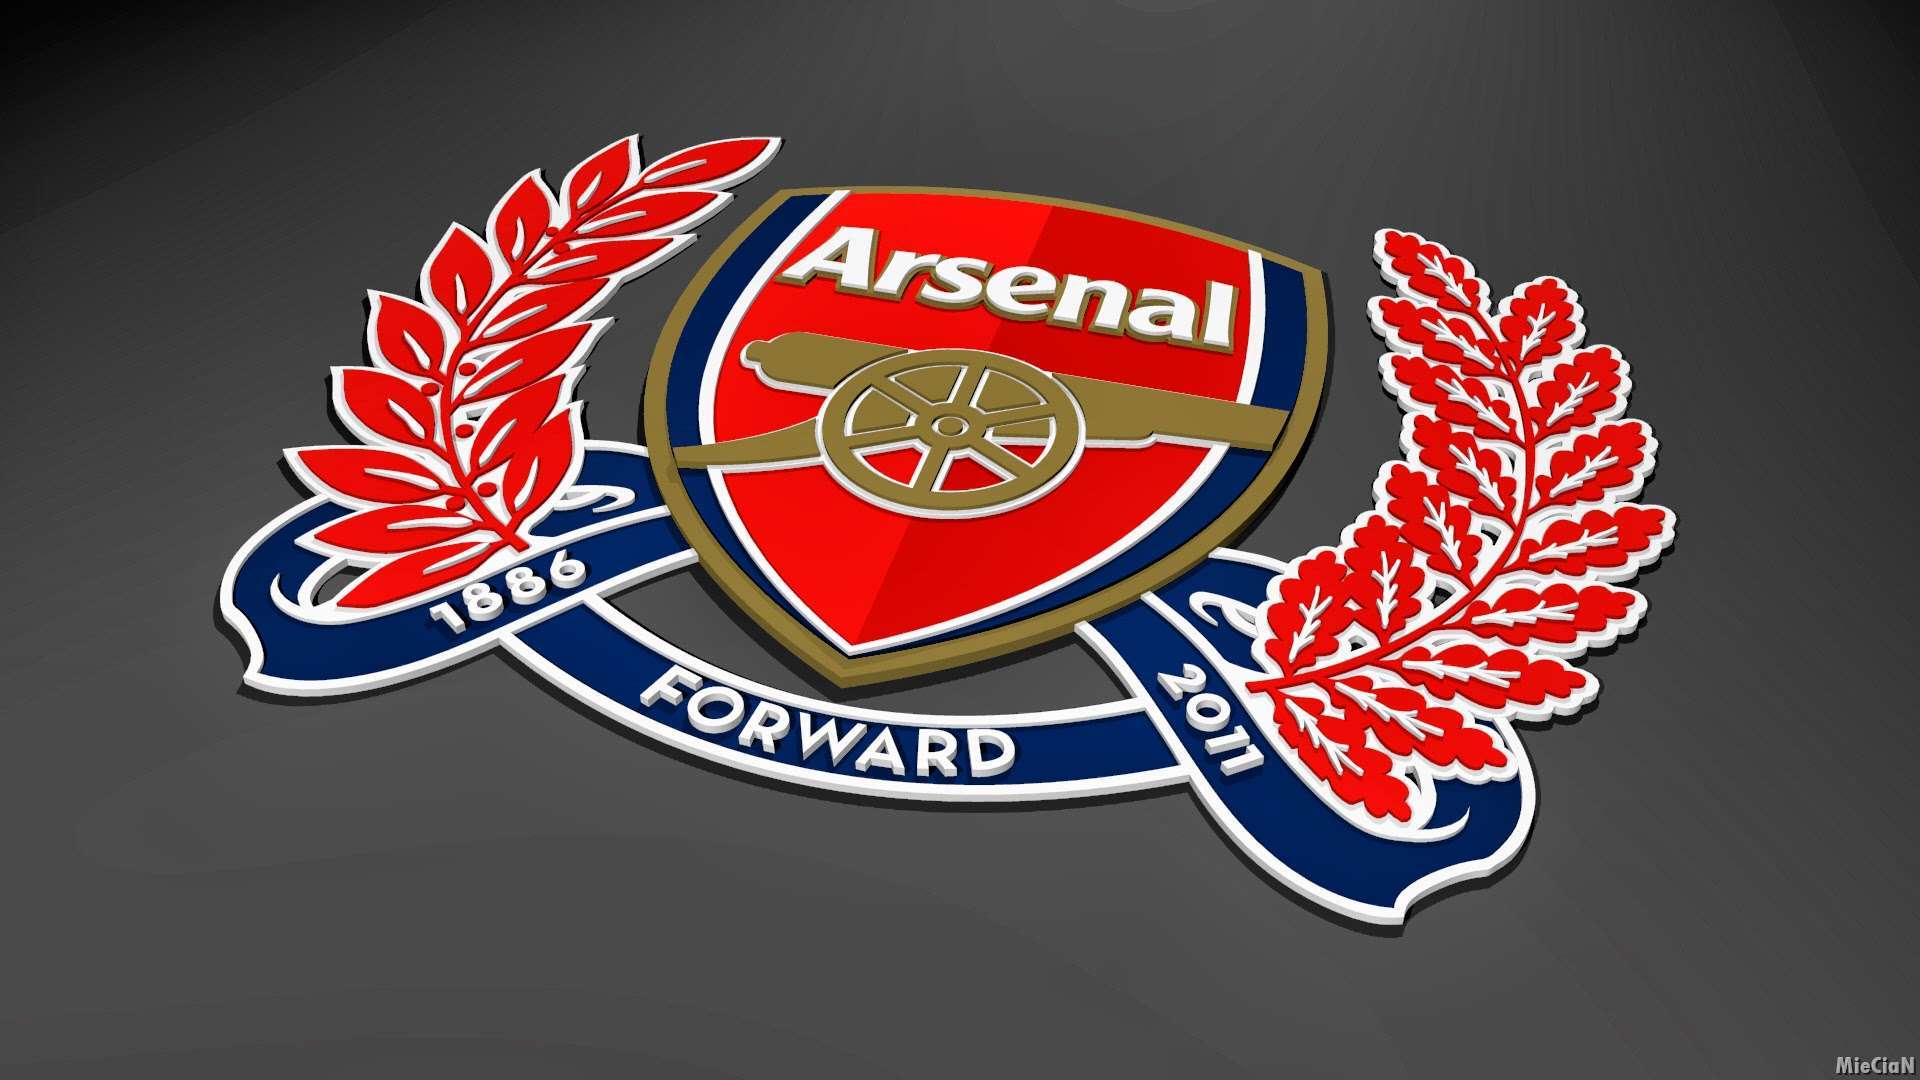 Wallpaper Arsenal Logo 1080p Upload At October